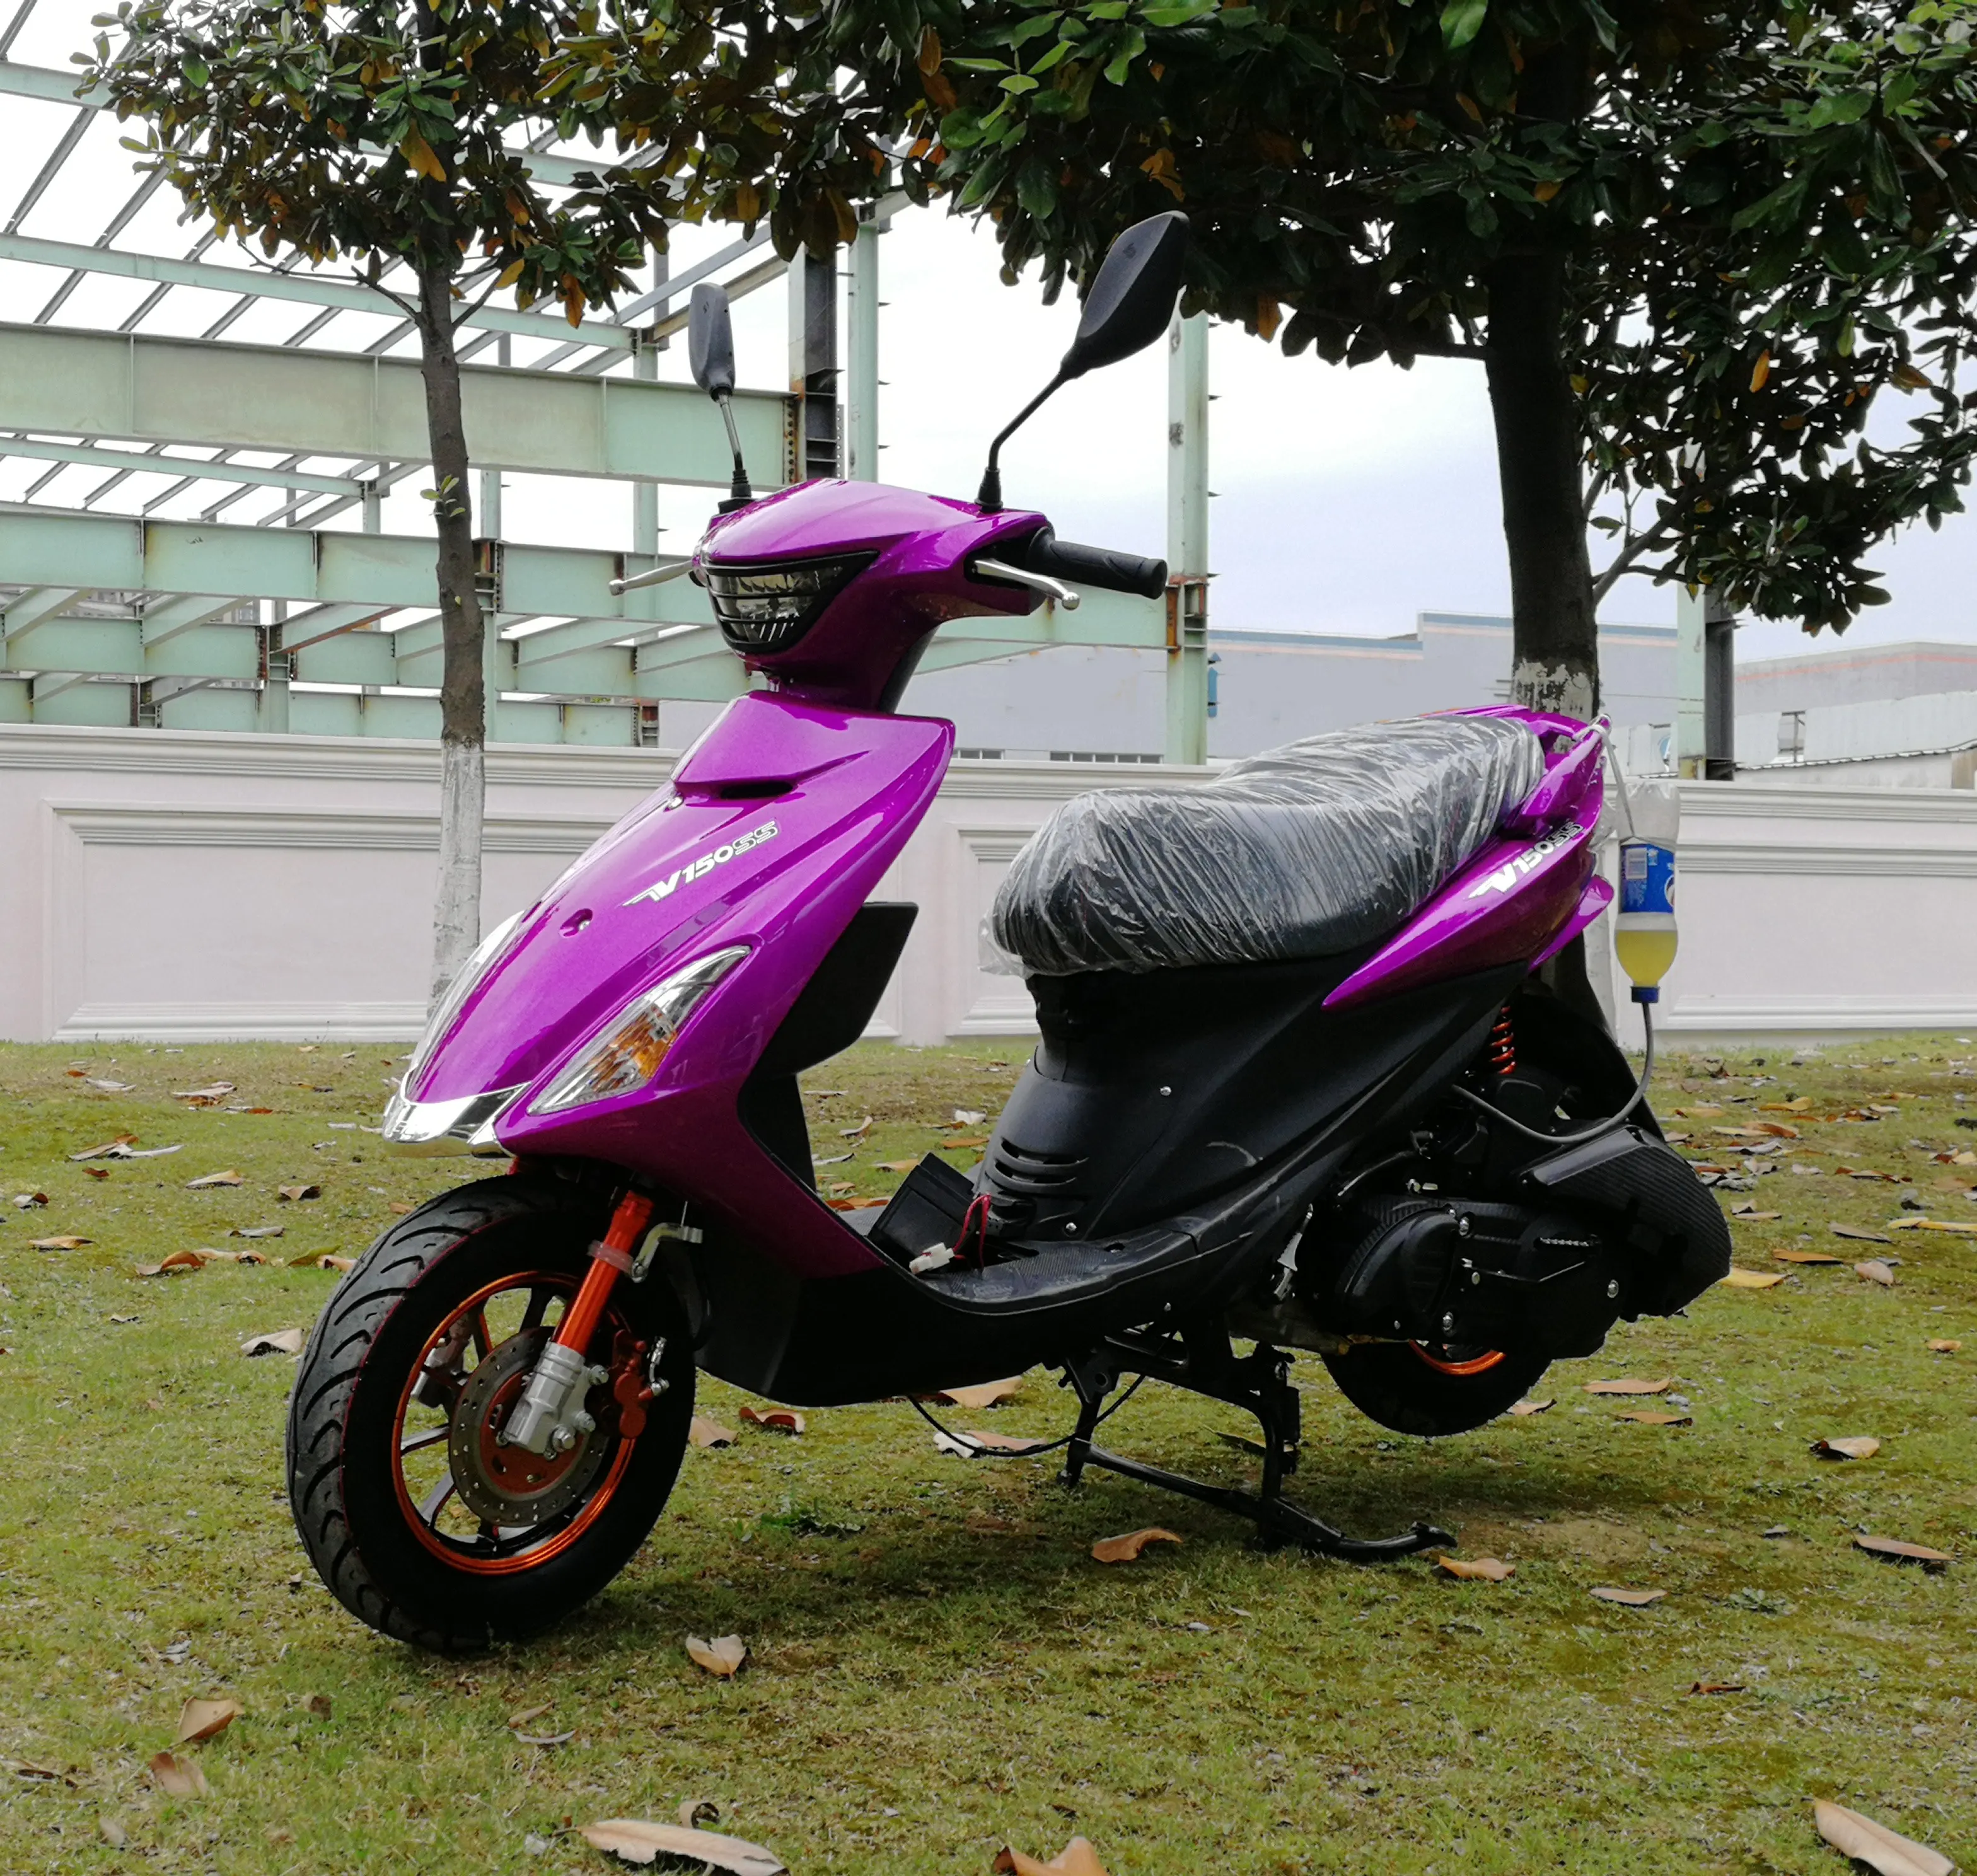 V150cc gasolina gasoline fuel petrol scooters scooter motorcycle V150 cc V150